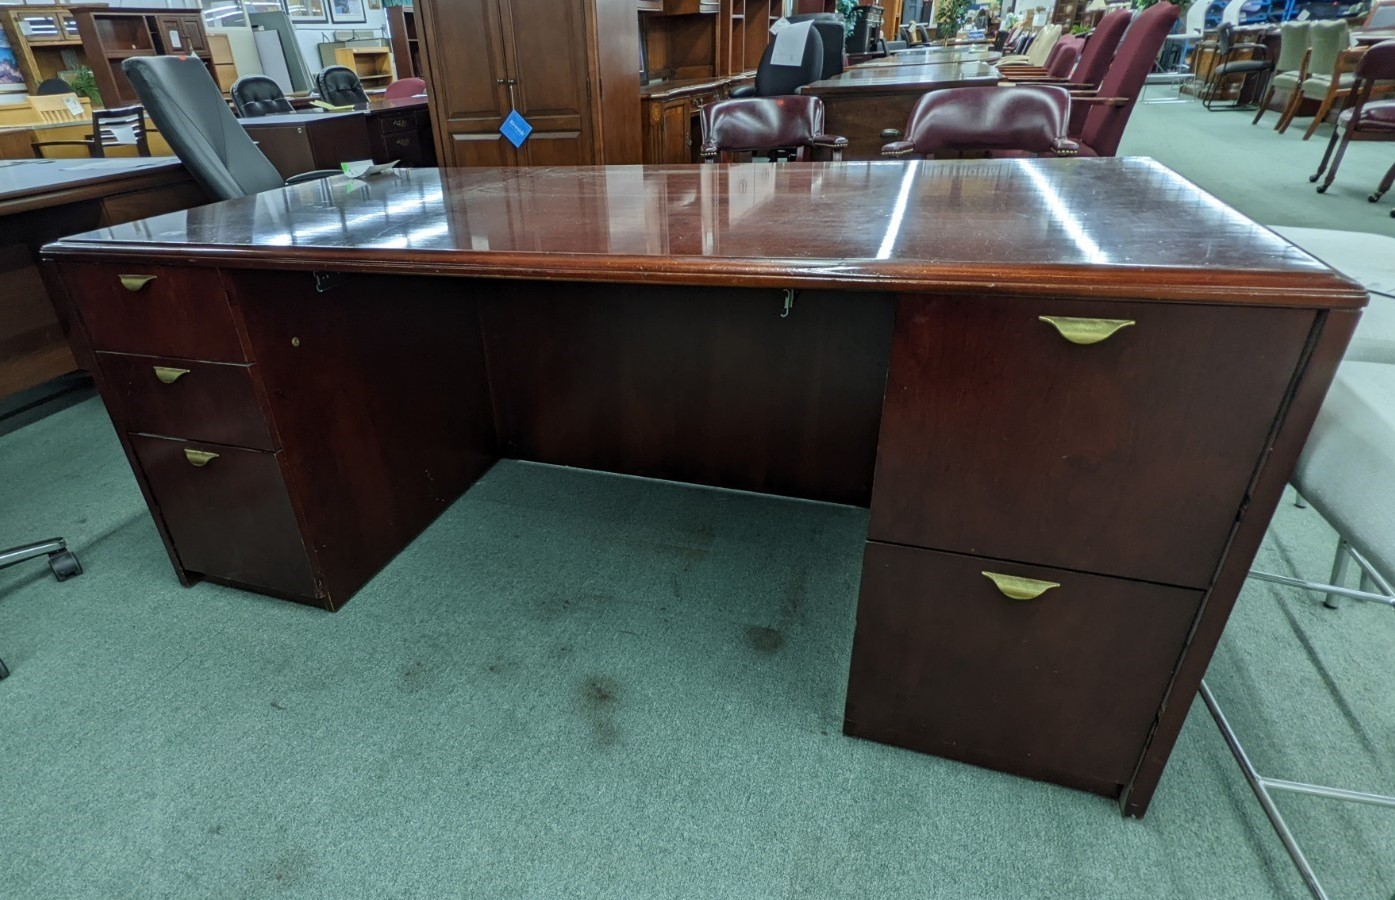 Used Double Pedestal Desk